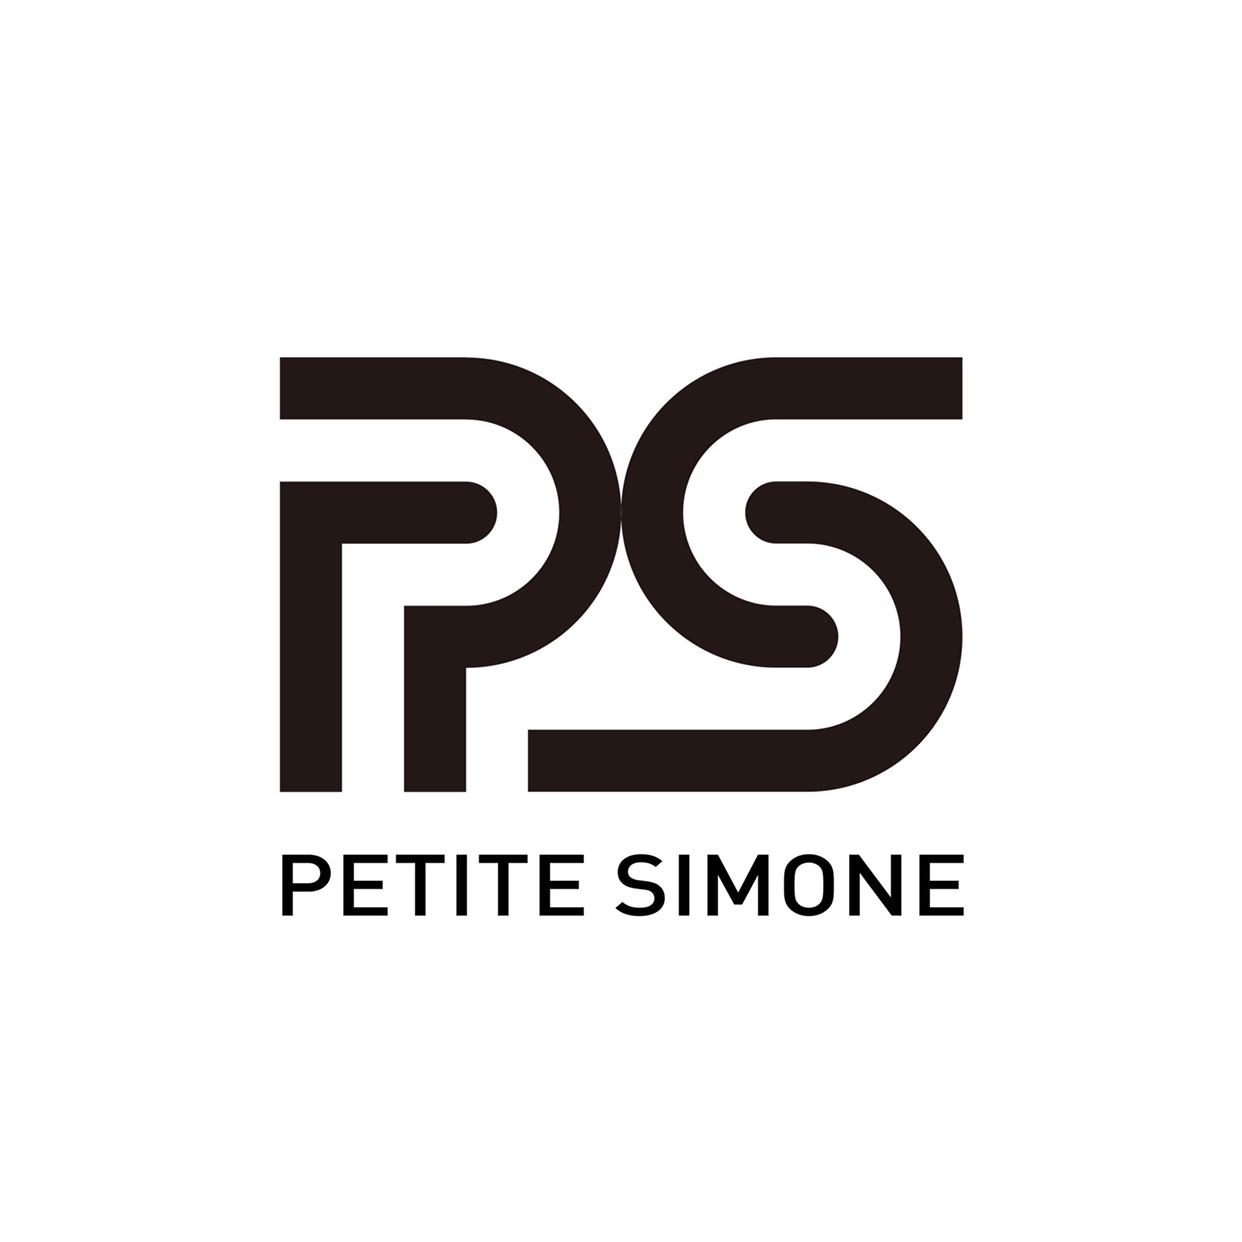 PETITE SIMONE's images